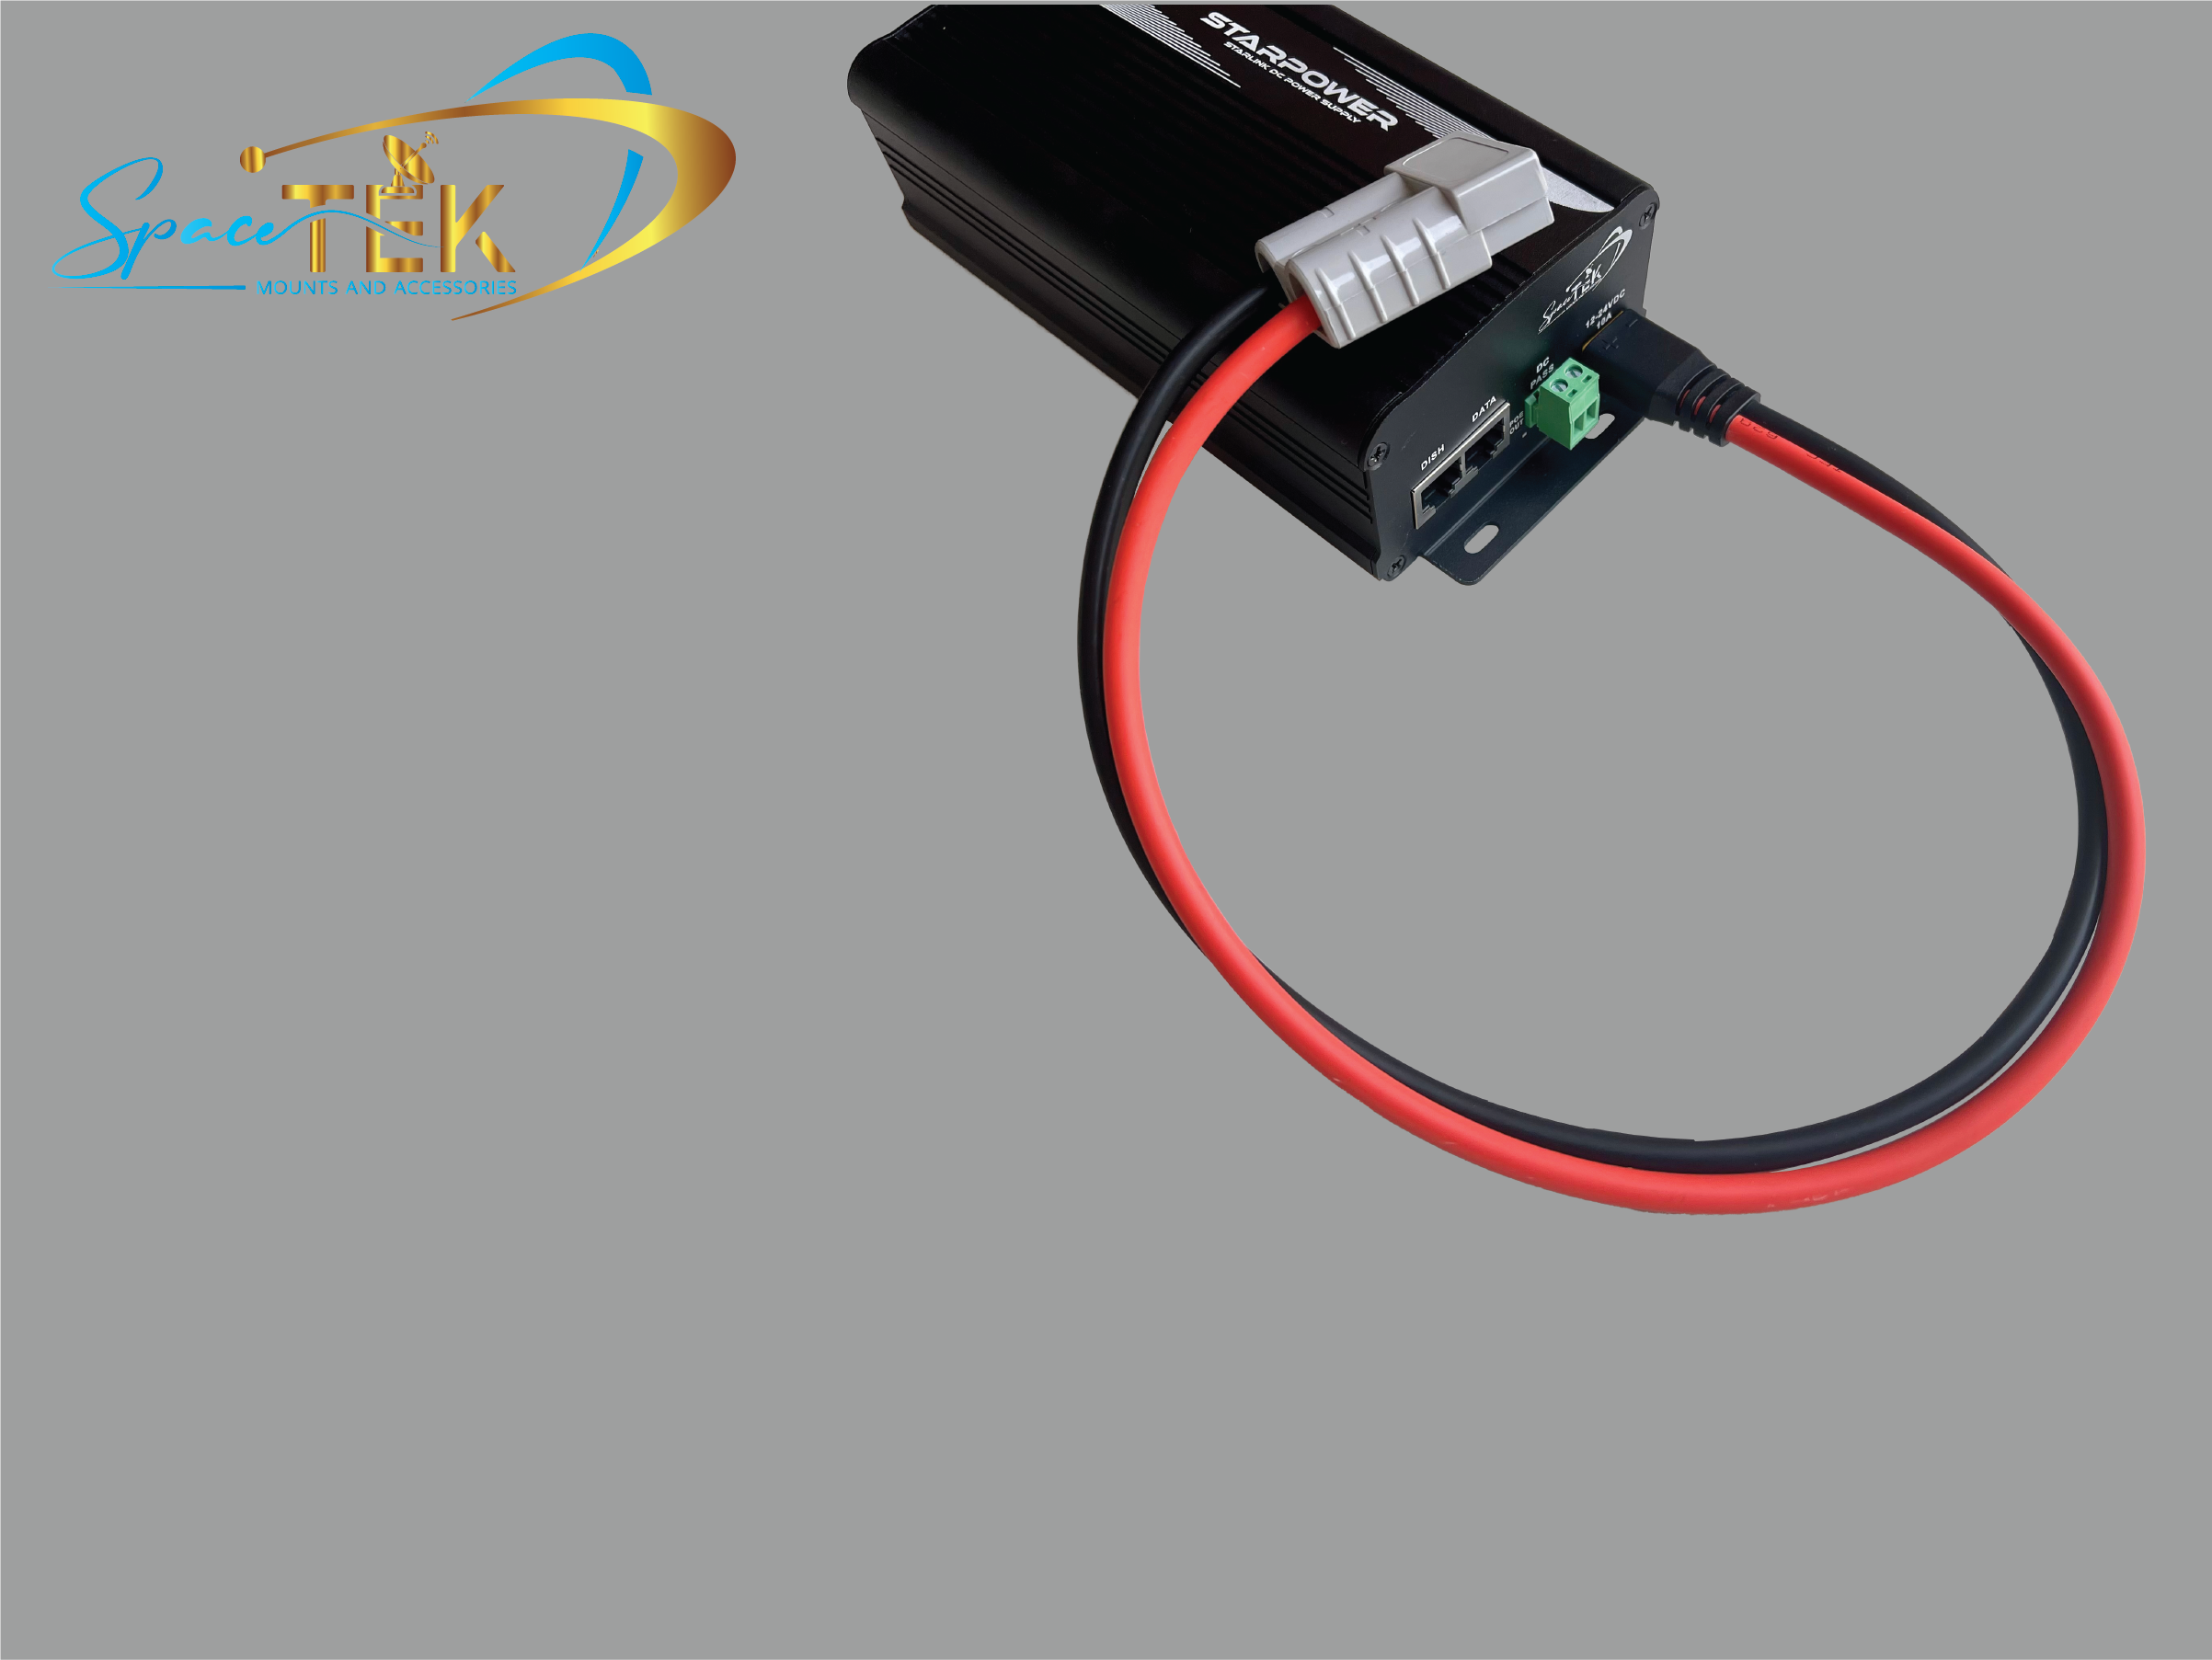 StarWifi Plug & Play Kit - Starlink compatible 12V Power Supply